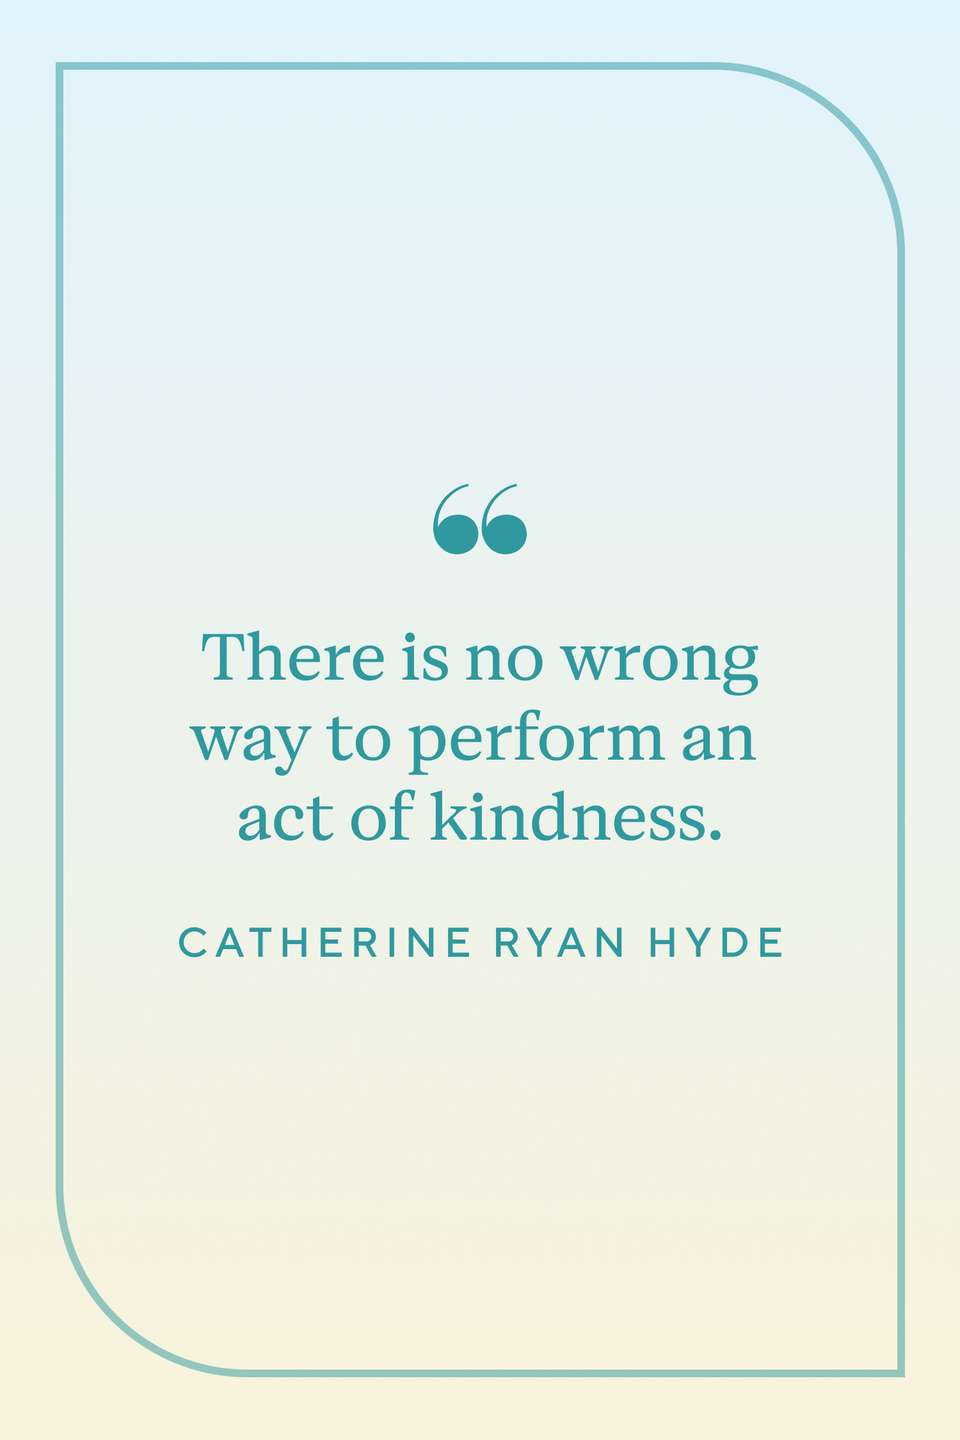 Catherine Ryan Hyde